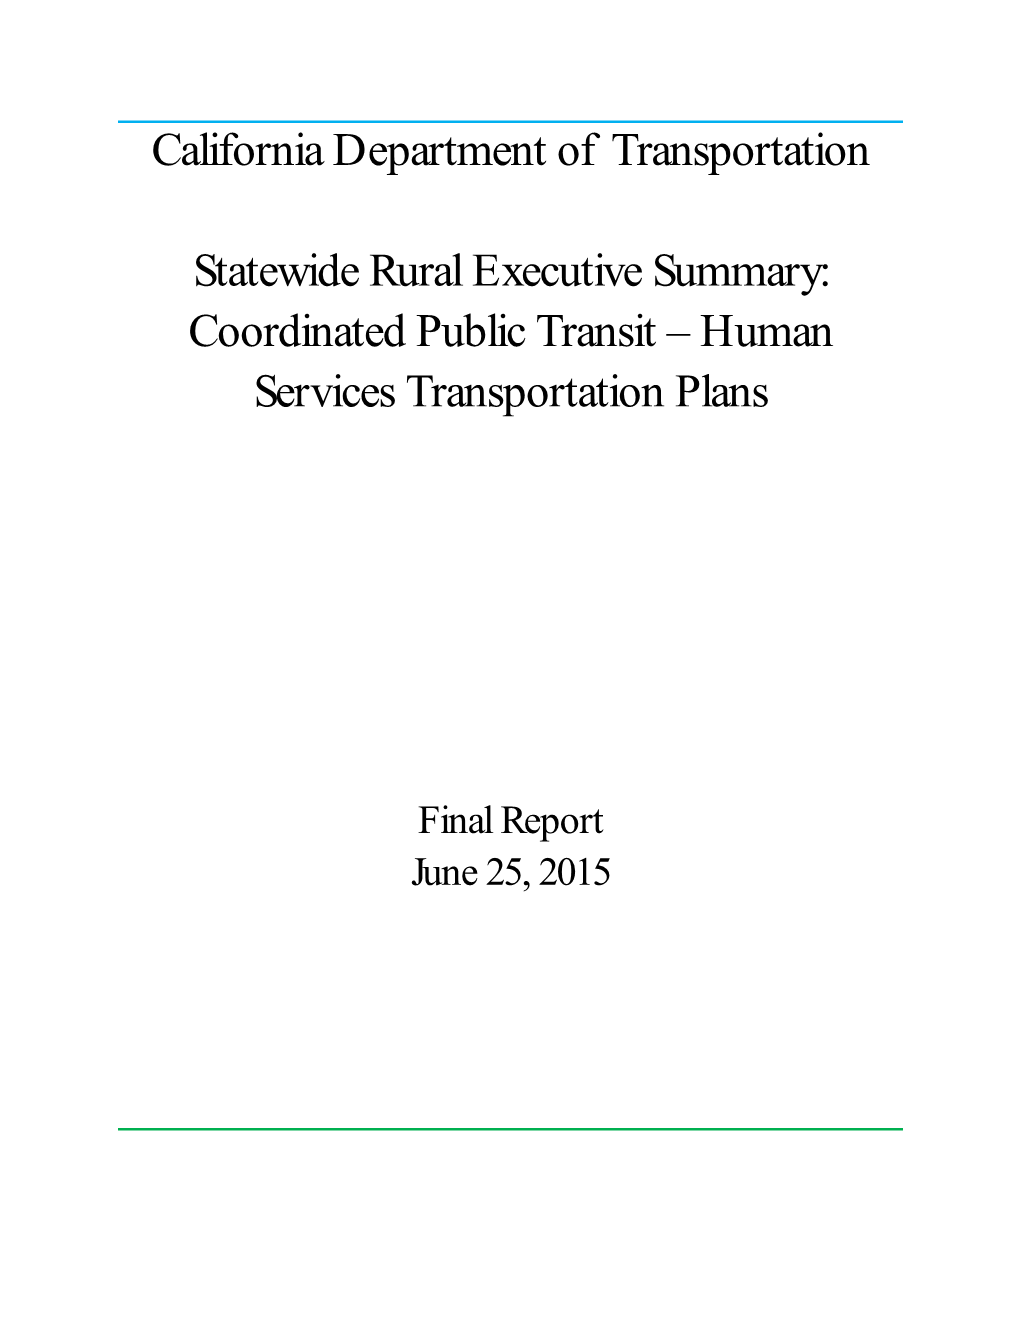 Coordinated Public Transit – Human Services Transportation Plans